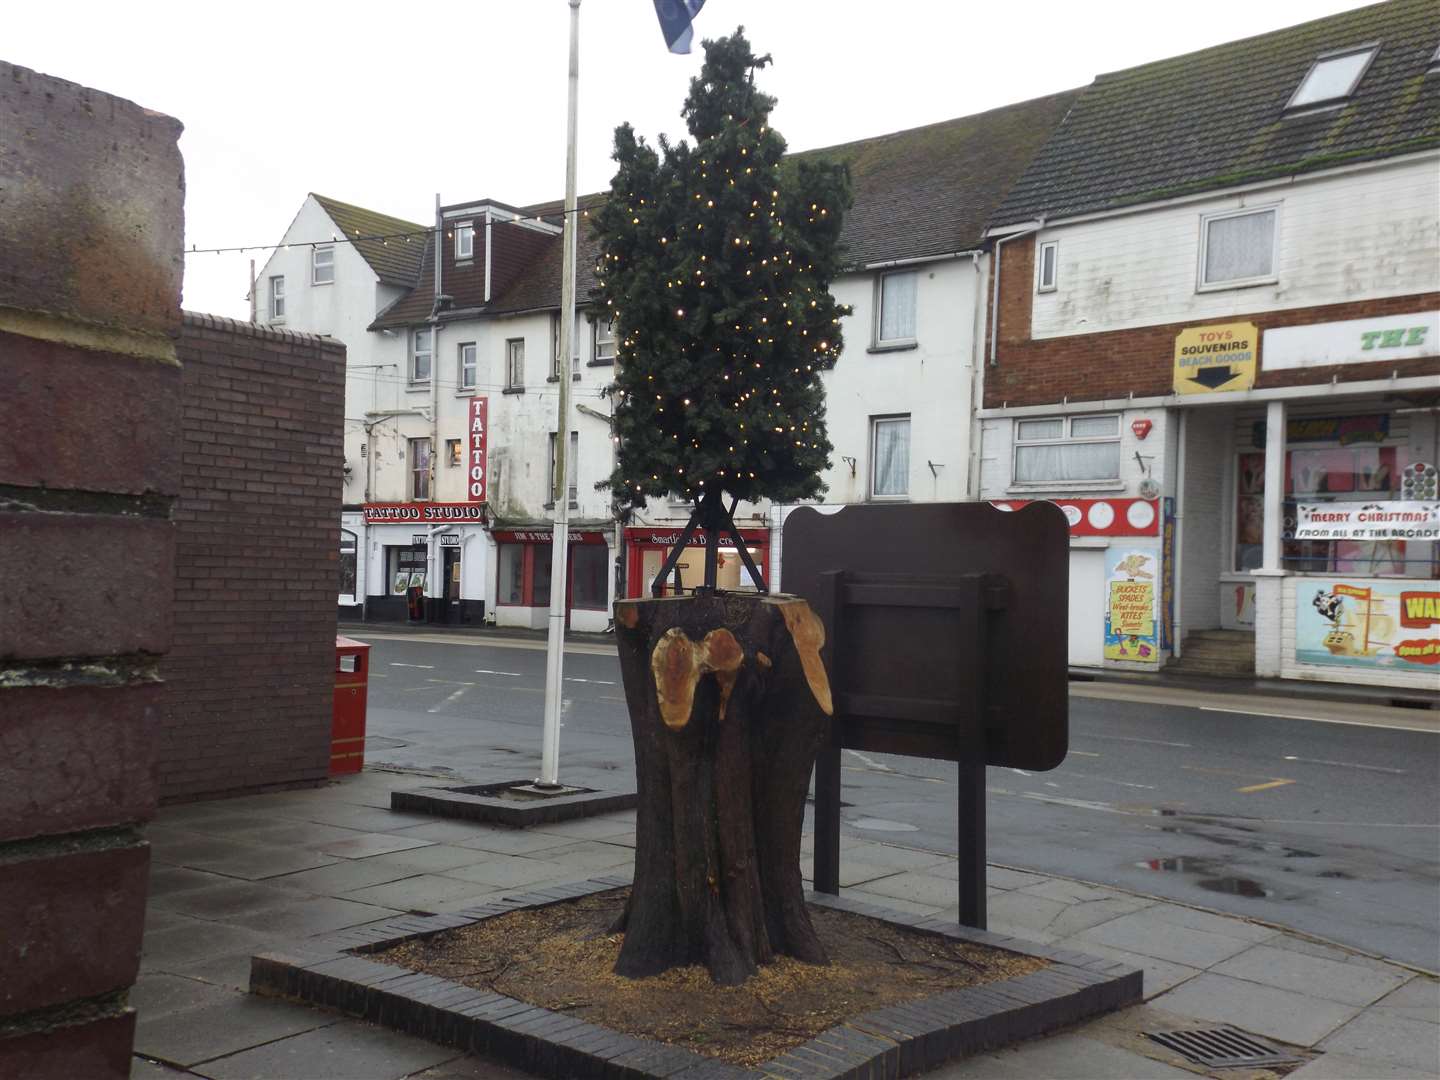 The Dymchurch Christmas tree